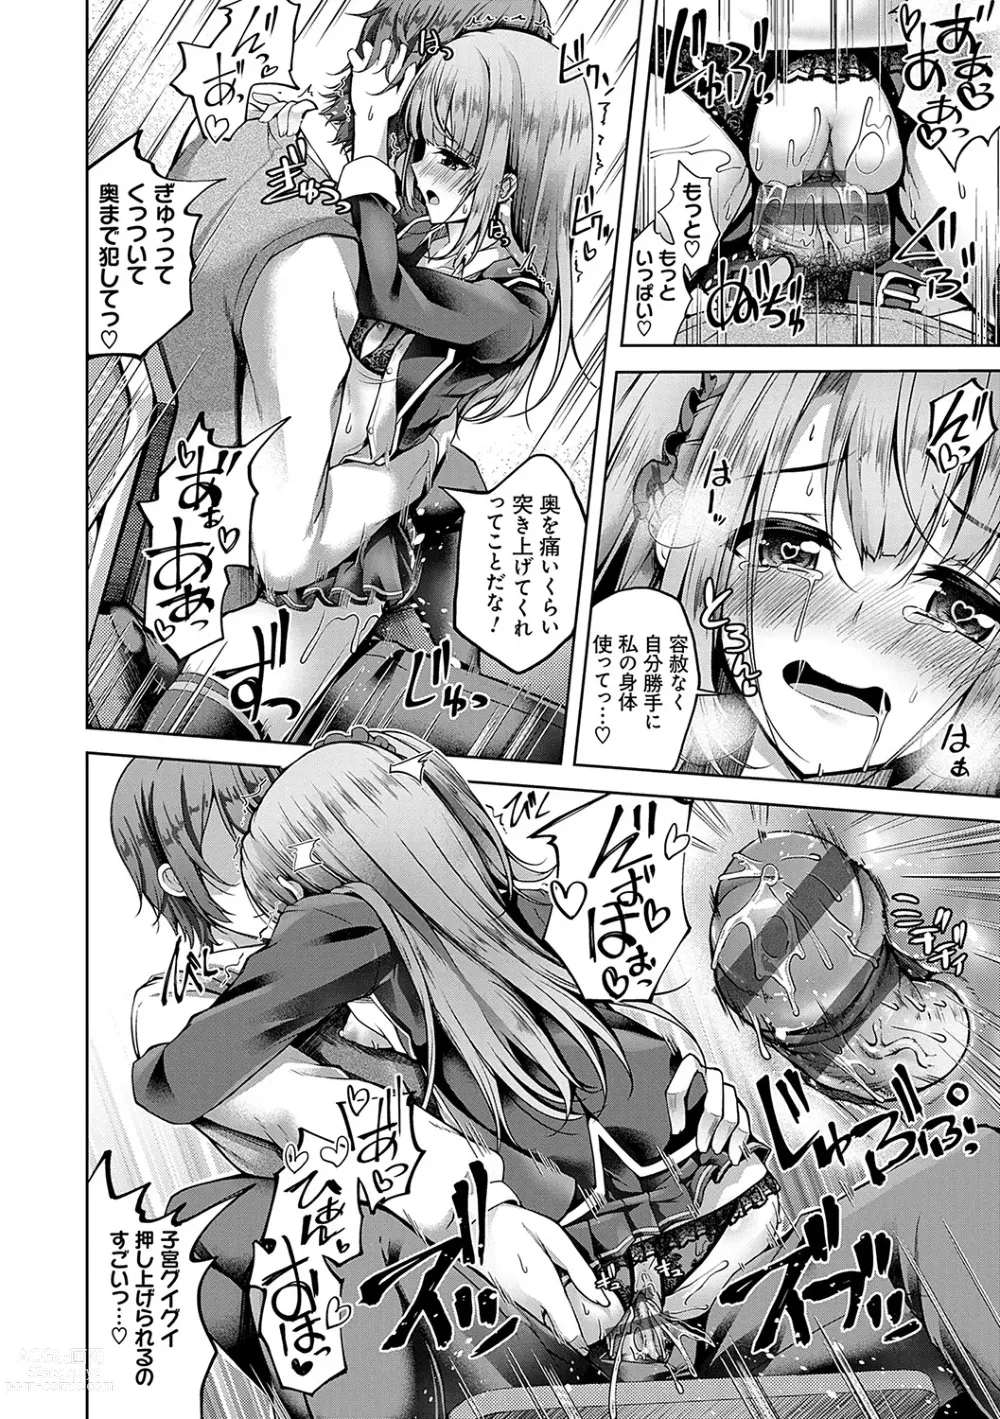 Page 15 of manga Koibana Fubuki